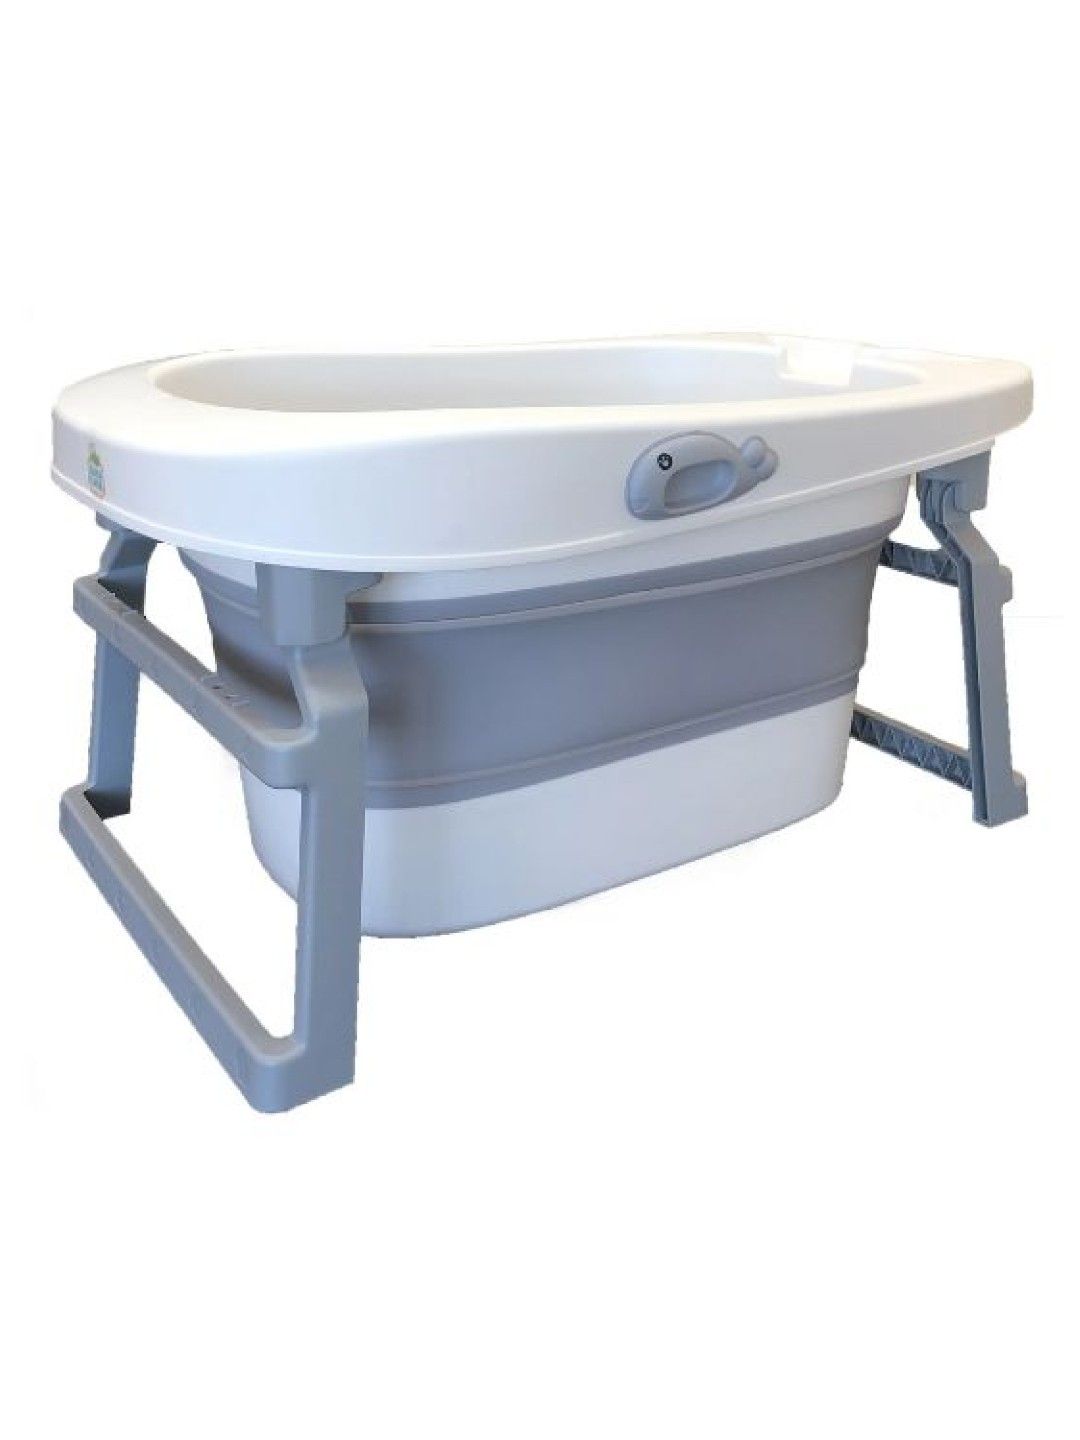 Coco Lala Foldable Bath Tub (Grey- Image 1)